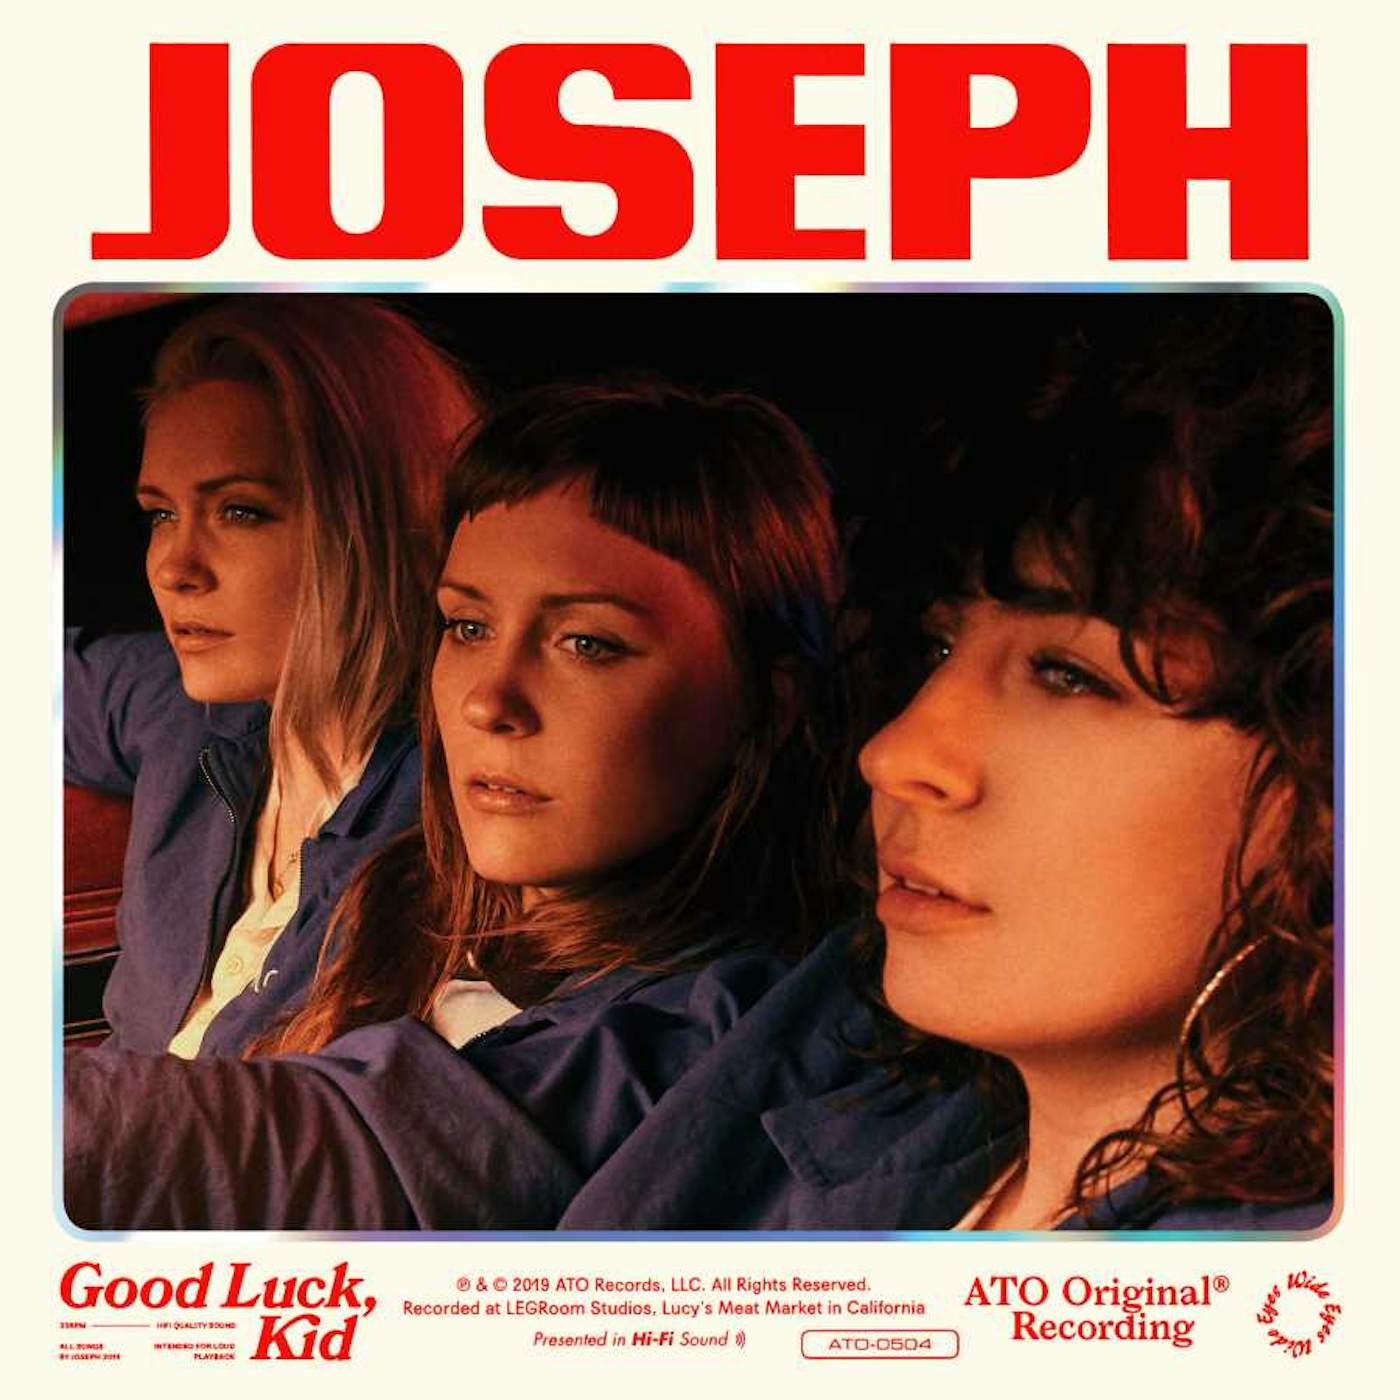 JOSEPH Good Luck, Kid (Clear Vinyl Record)